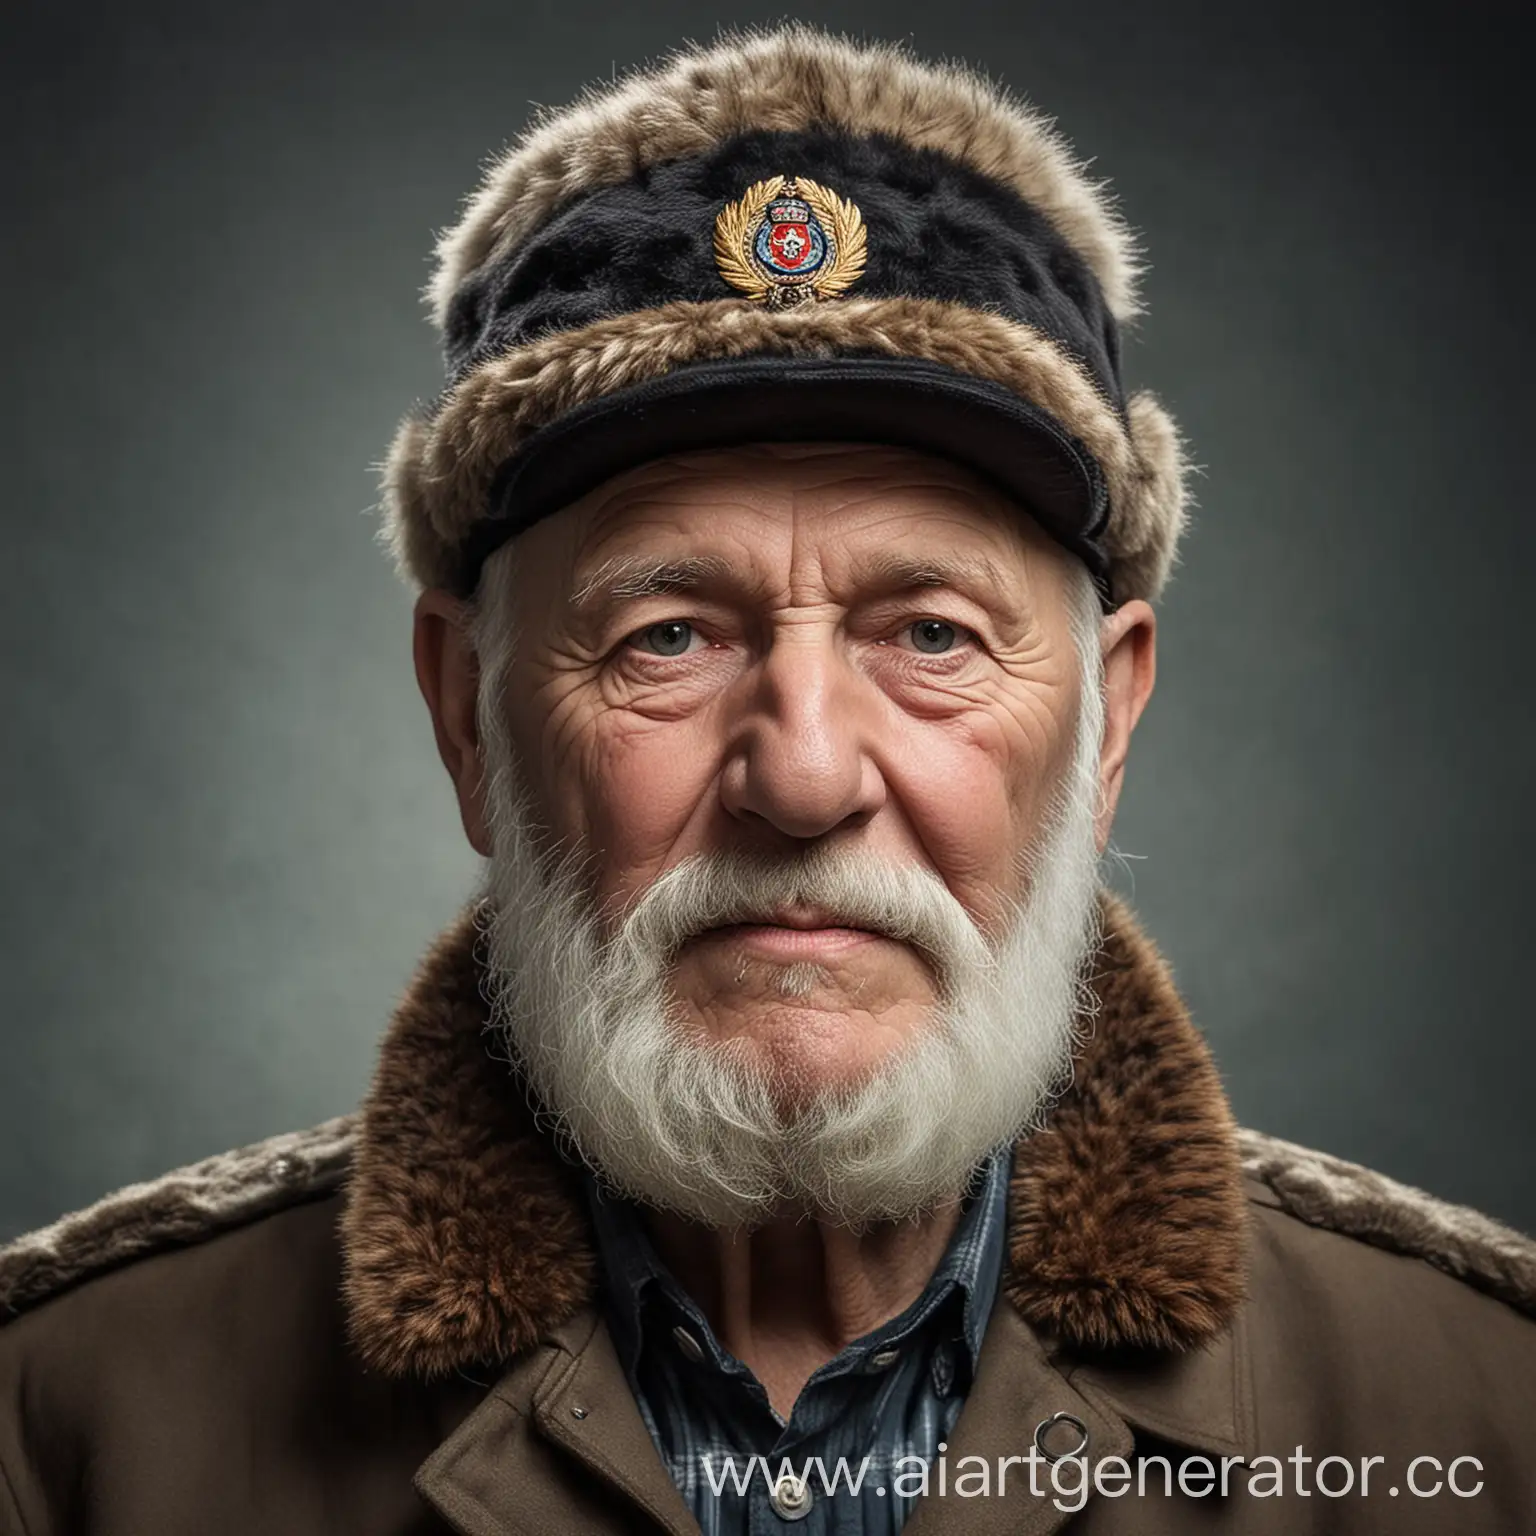 Pensioner-Advocating-for-Social-Rights-and-Guarantees-with-Beard-and-Ushanka